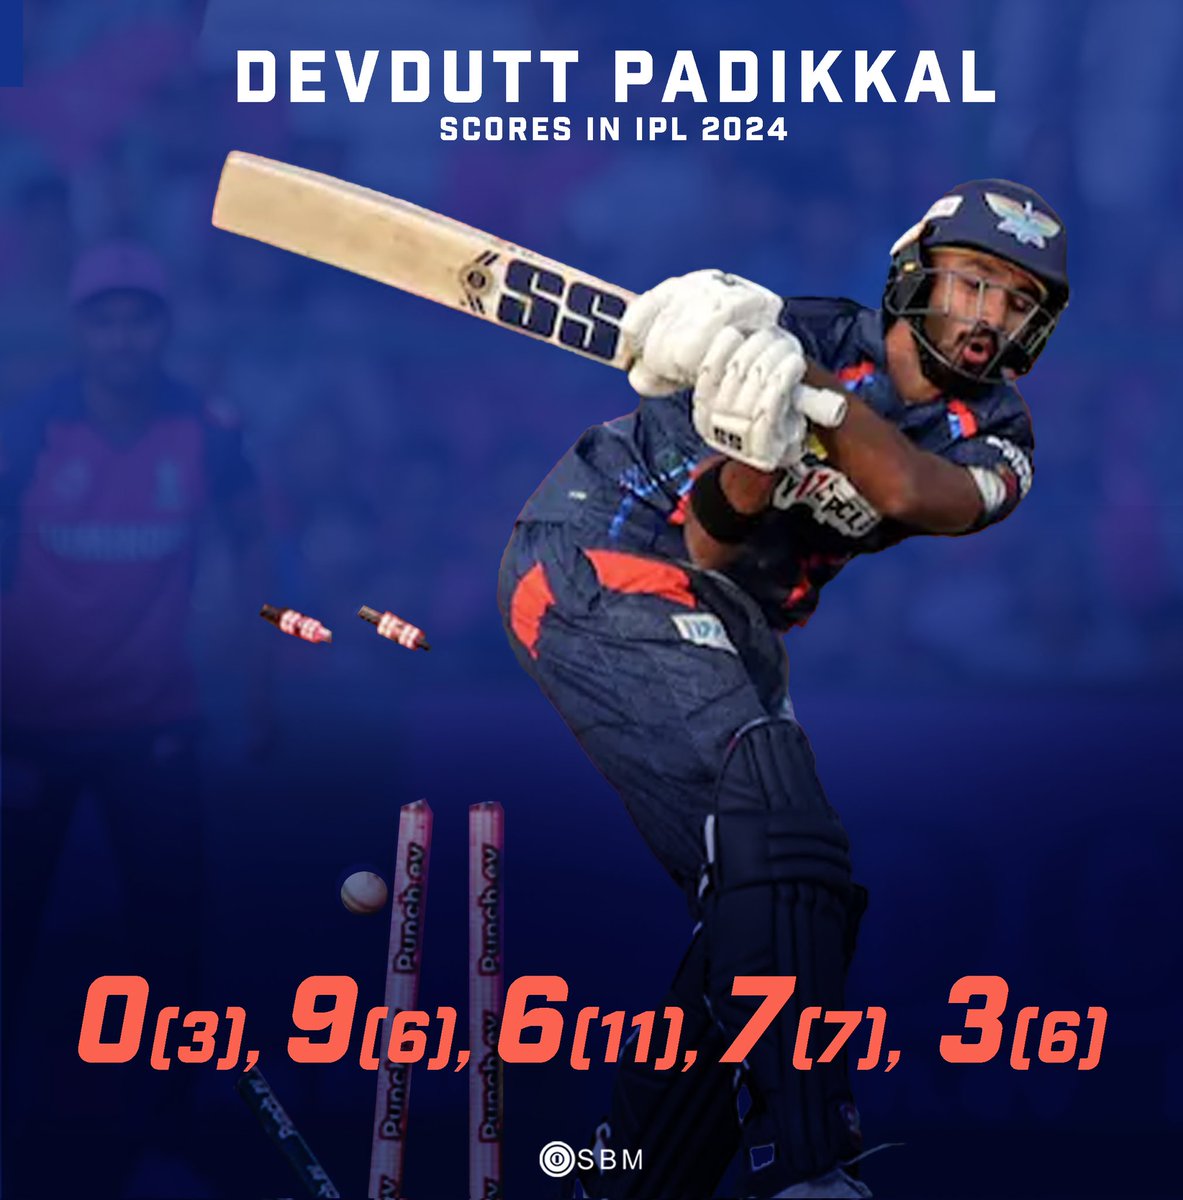 Devdutt Padikkal's miserable form with the bat continues #DevduttPadikkal #LSGvDC #LSGvsDC #IPL #IPL2024 #Cricket #SBM